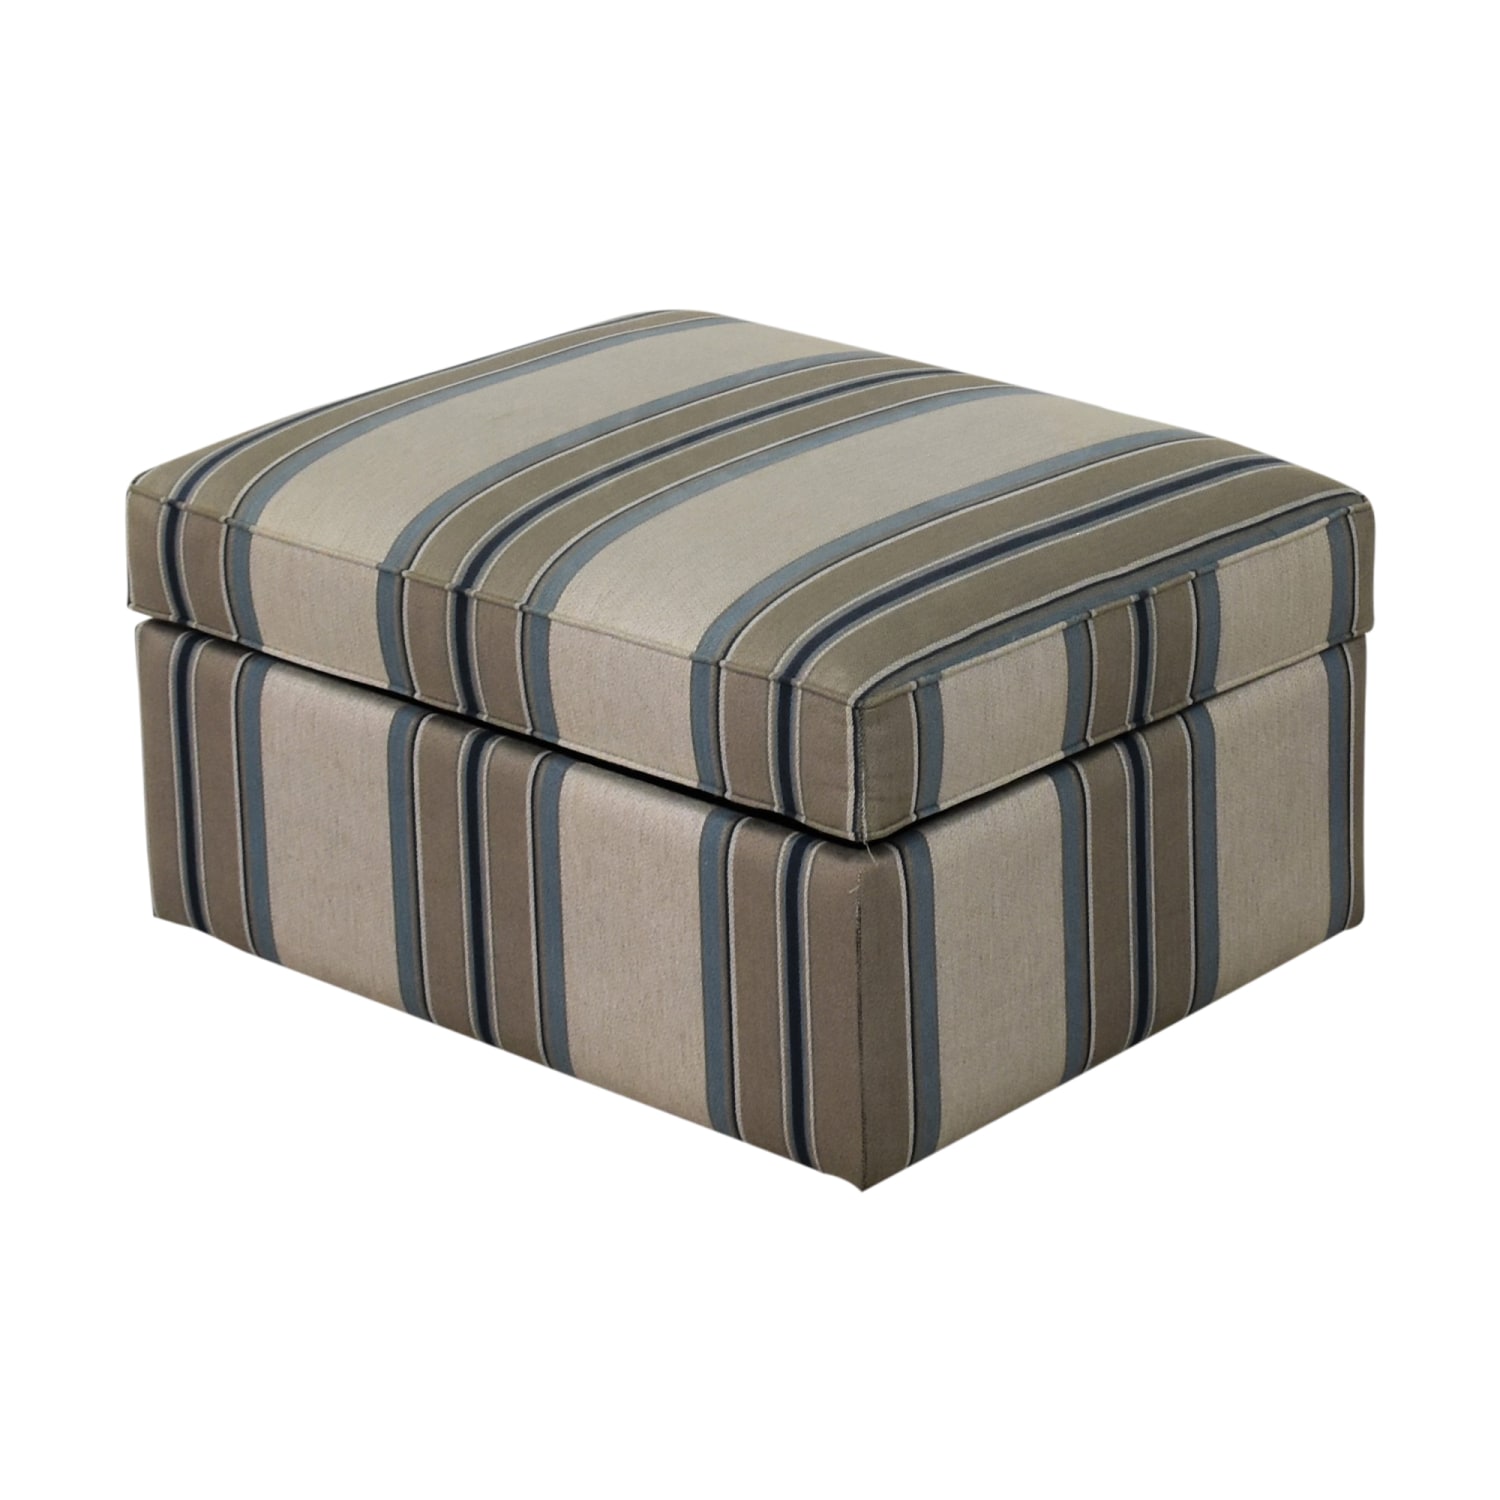 Upholstered Striped Storage Ottoman   